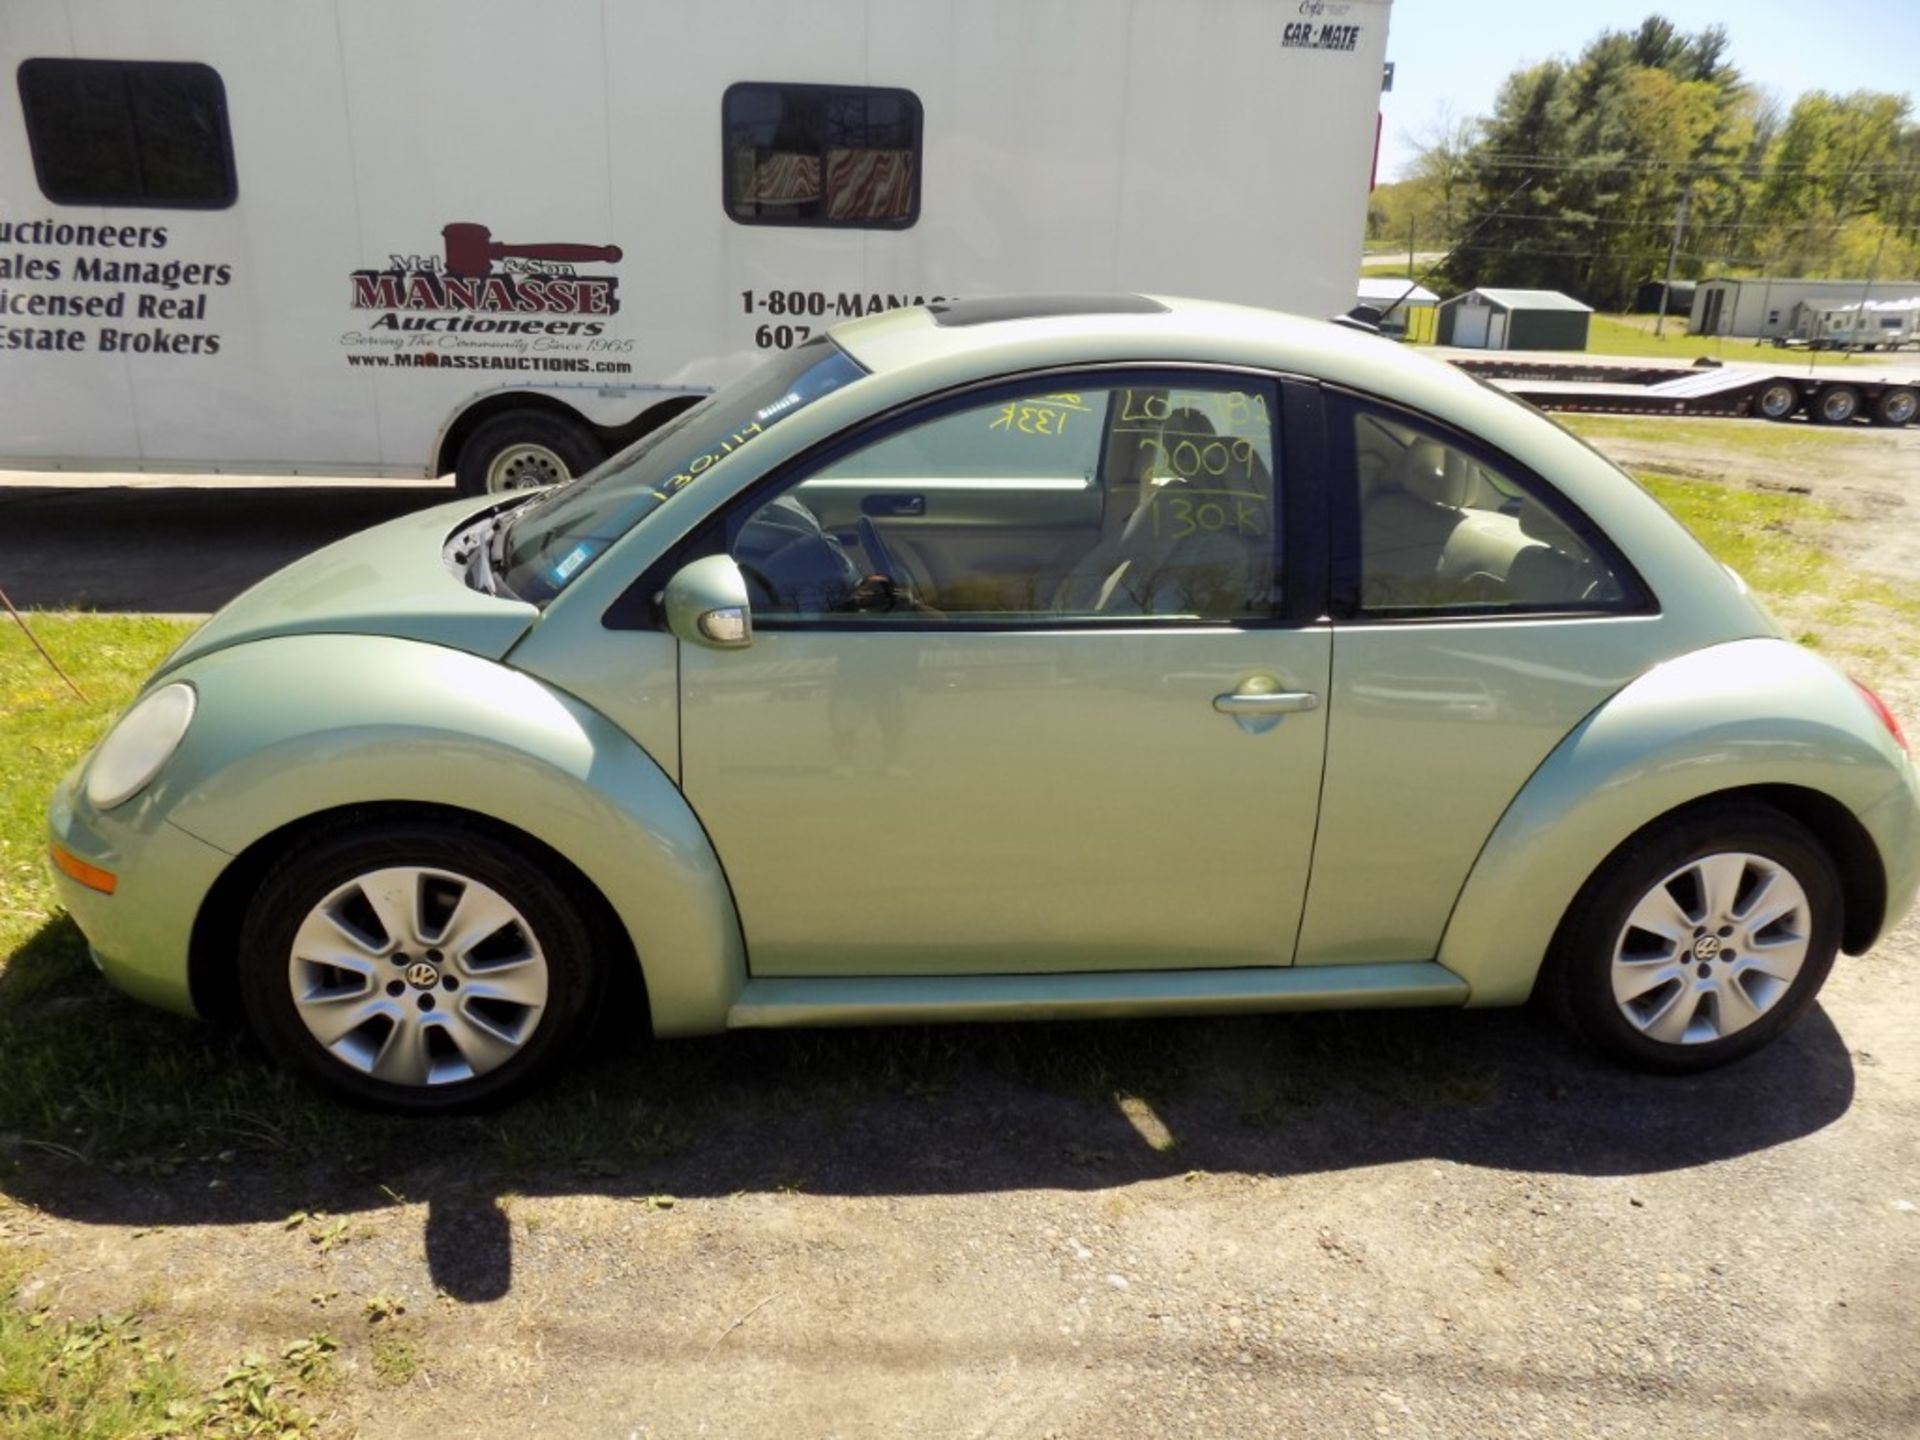 2009 Volkswagen Beetle S, 5-Speed Man, Leather, Sunroof, Green, 130,114 Mi, Vin# 3VWRG31C39M503848 - - Image 2 of 4